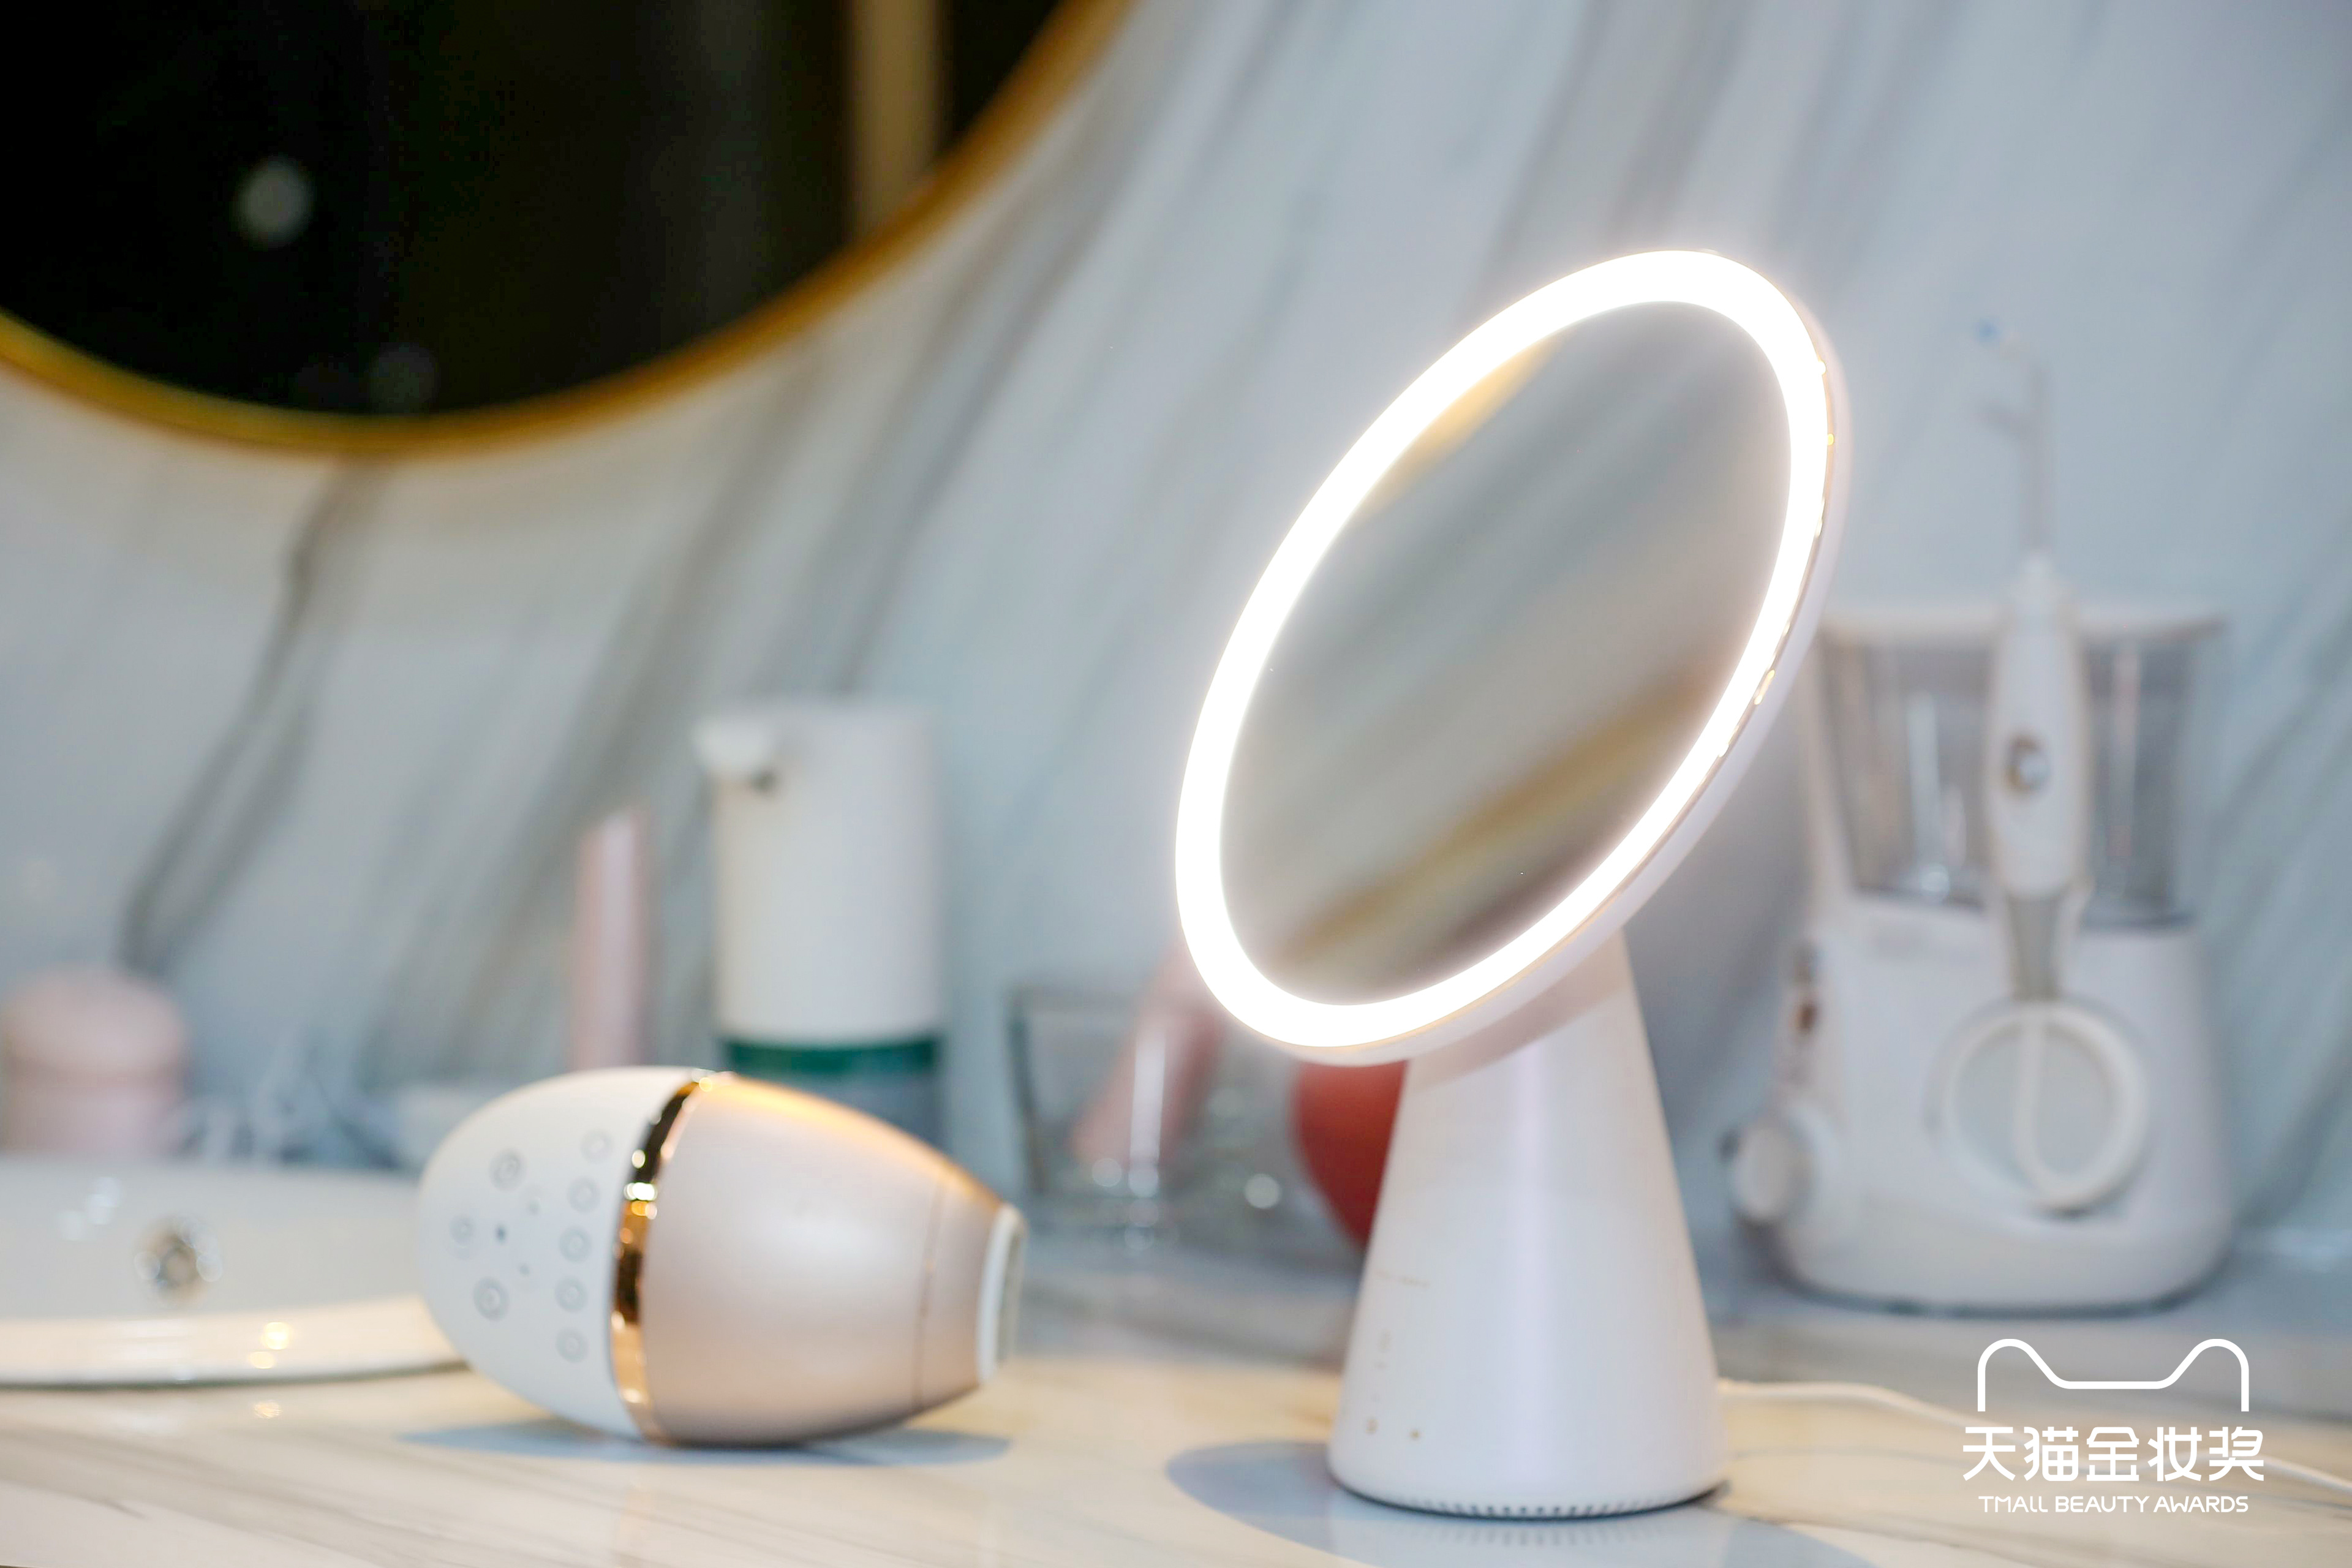 Alibaba A.I. Labs' Tmall Genie Queen smart mirror